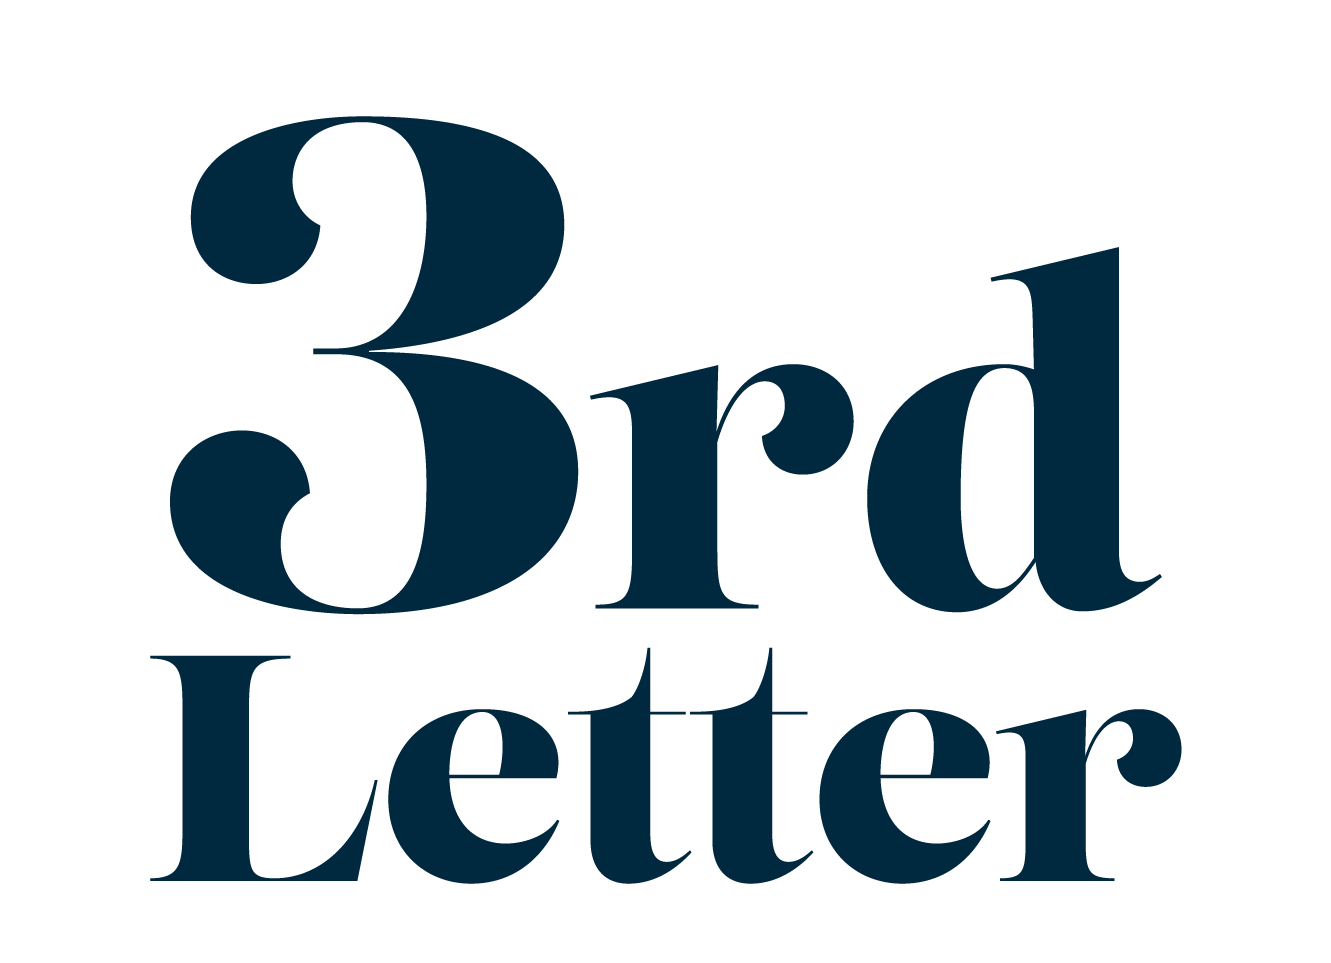 Third Letter